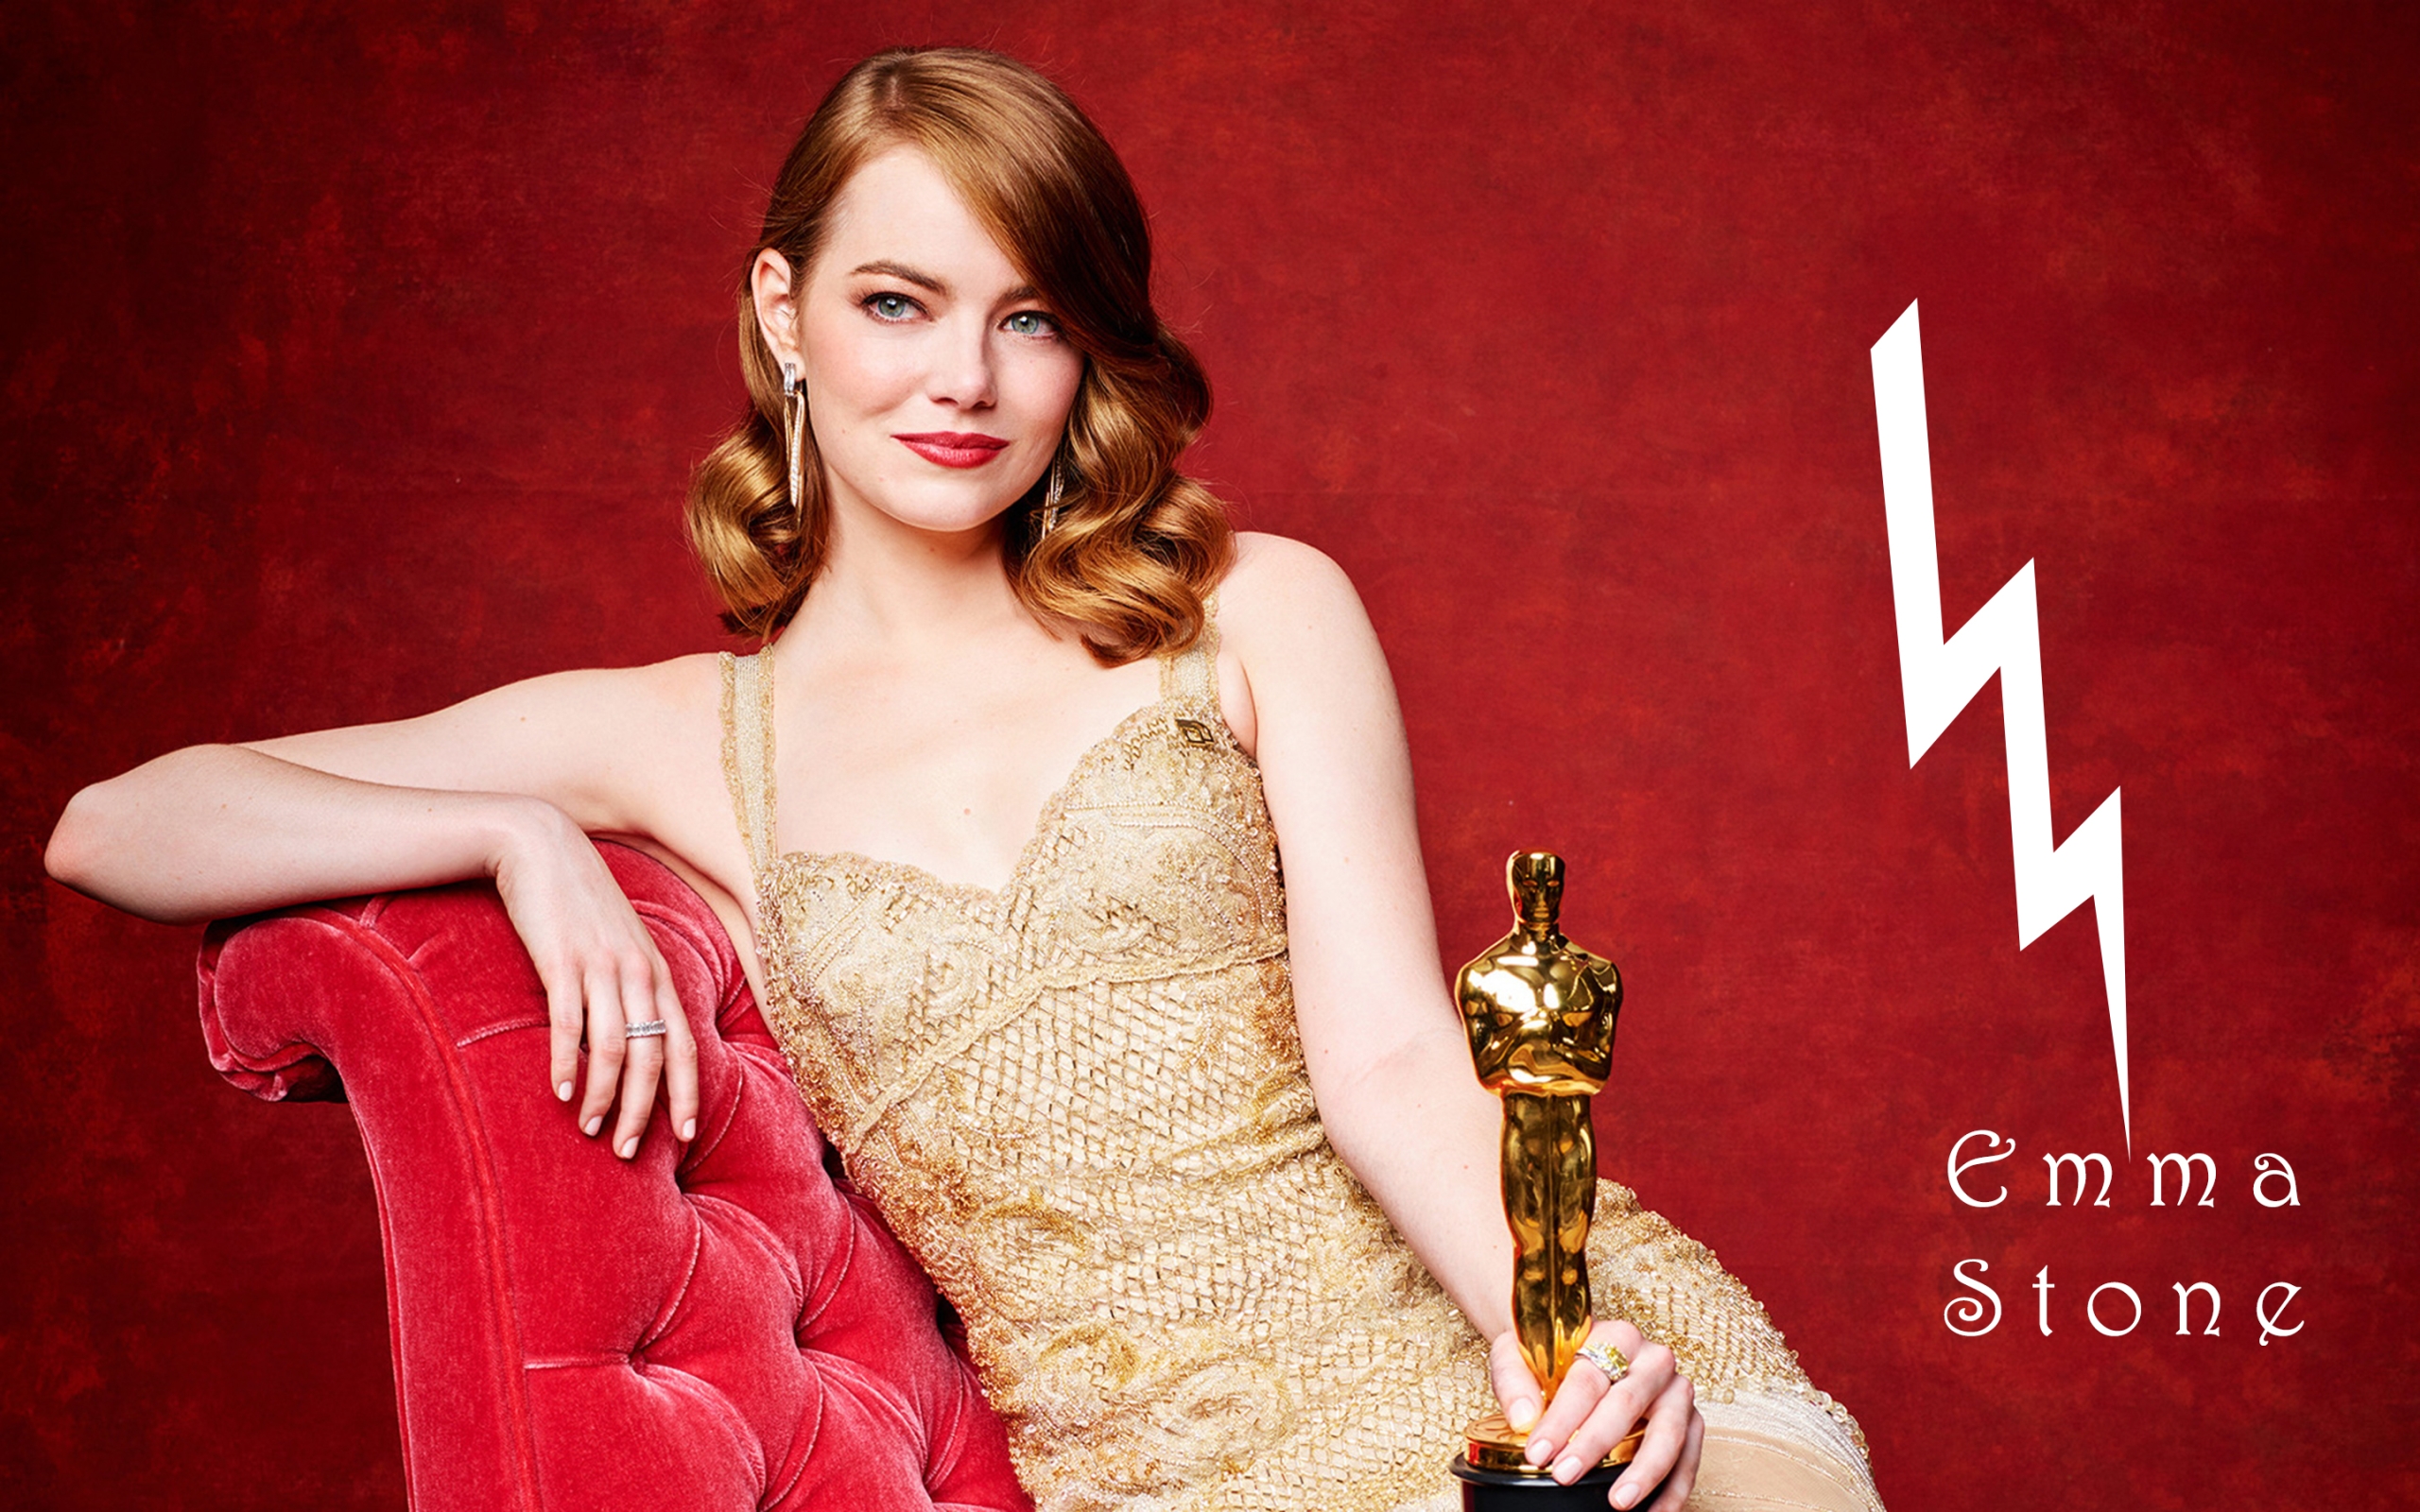 Emma Stone Oscar Winner for 2560 x 1600 widescreen resolution